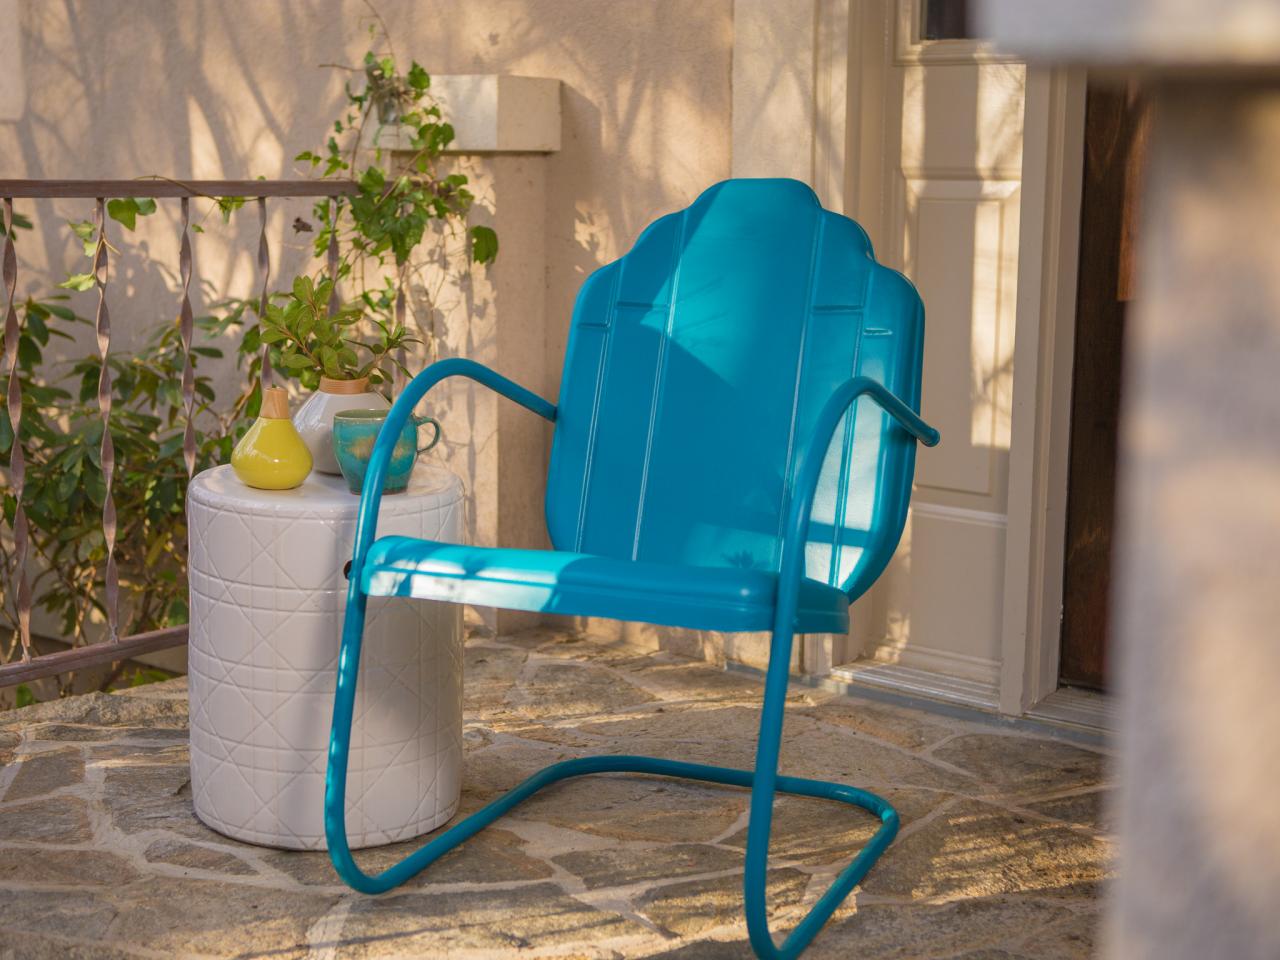 How To Paint An Outdoor Metal Chair, Best Way To Paint Metal Garden Furniture